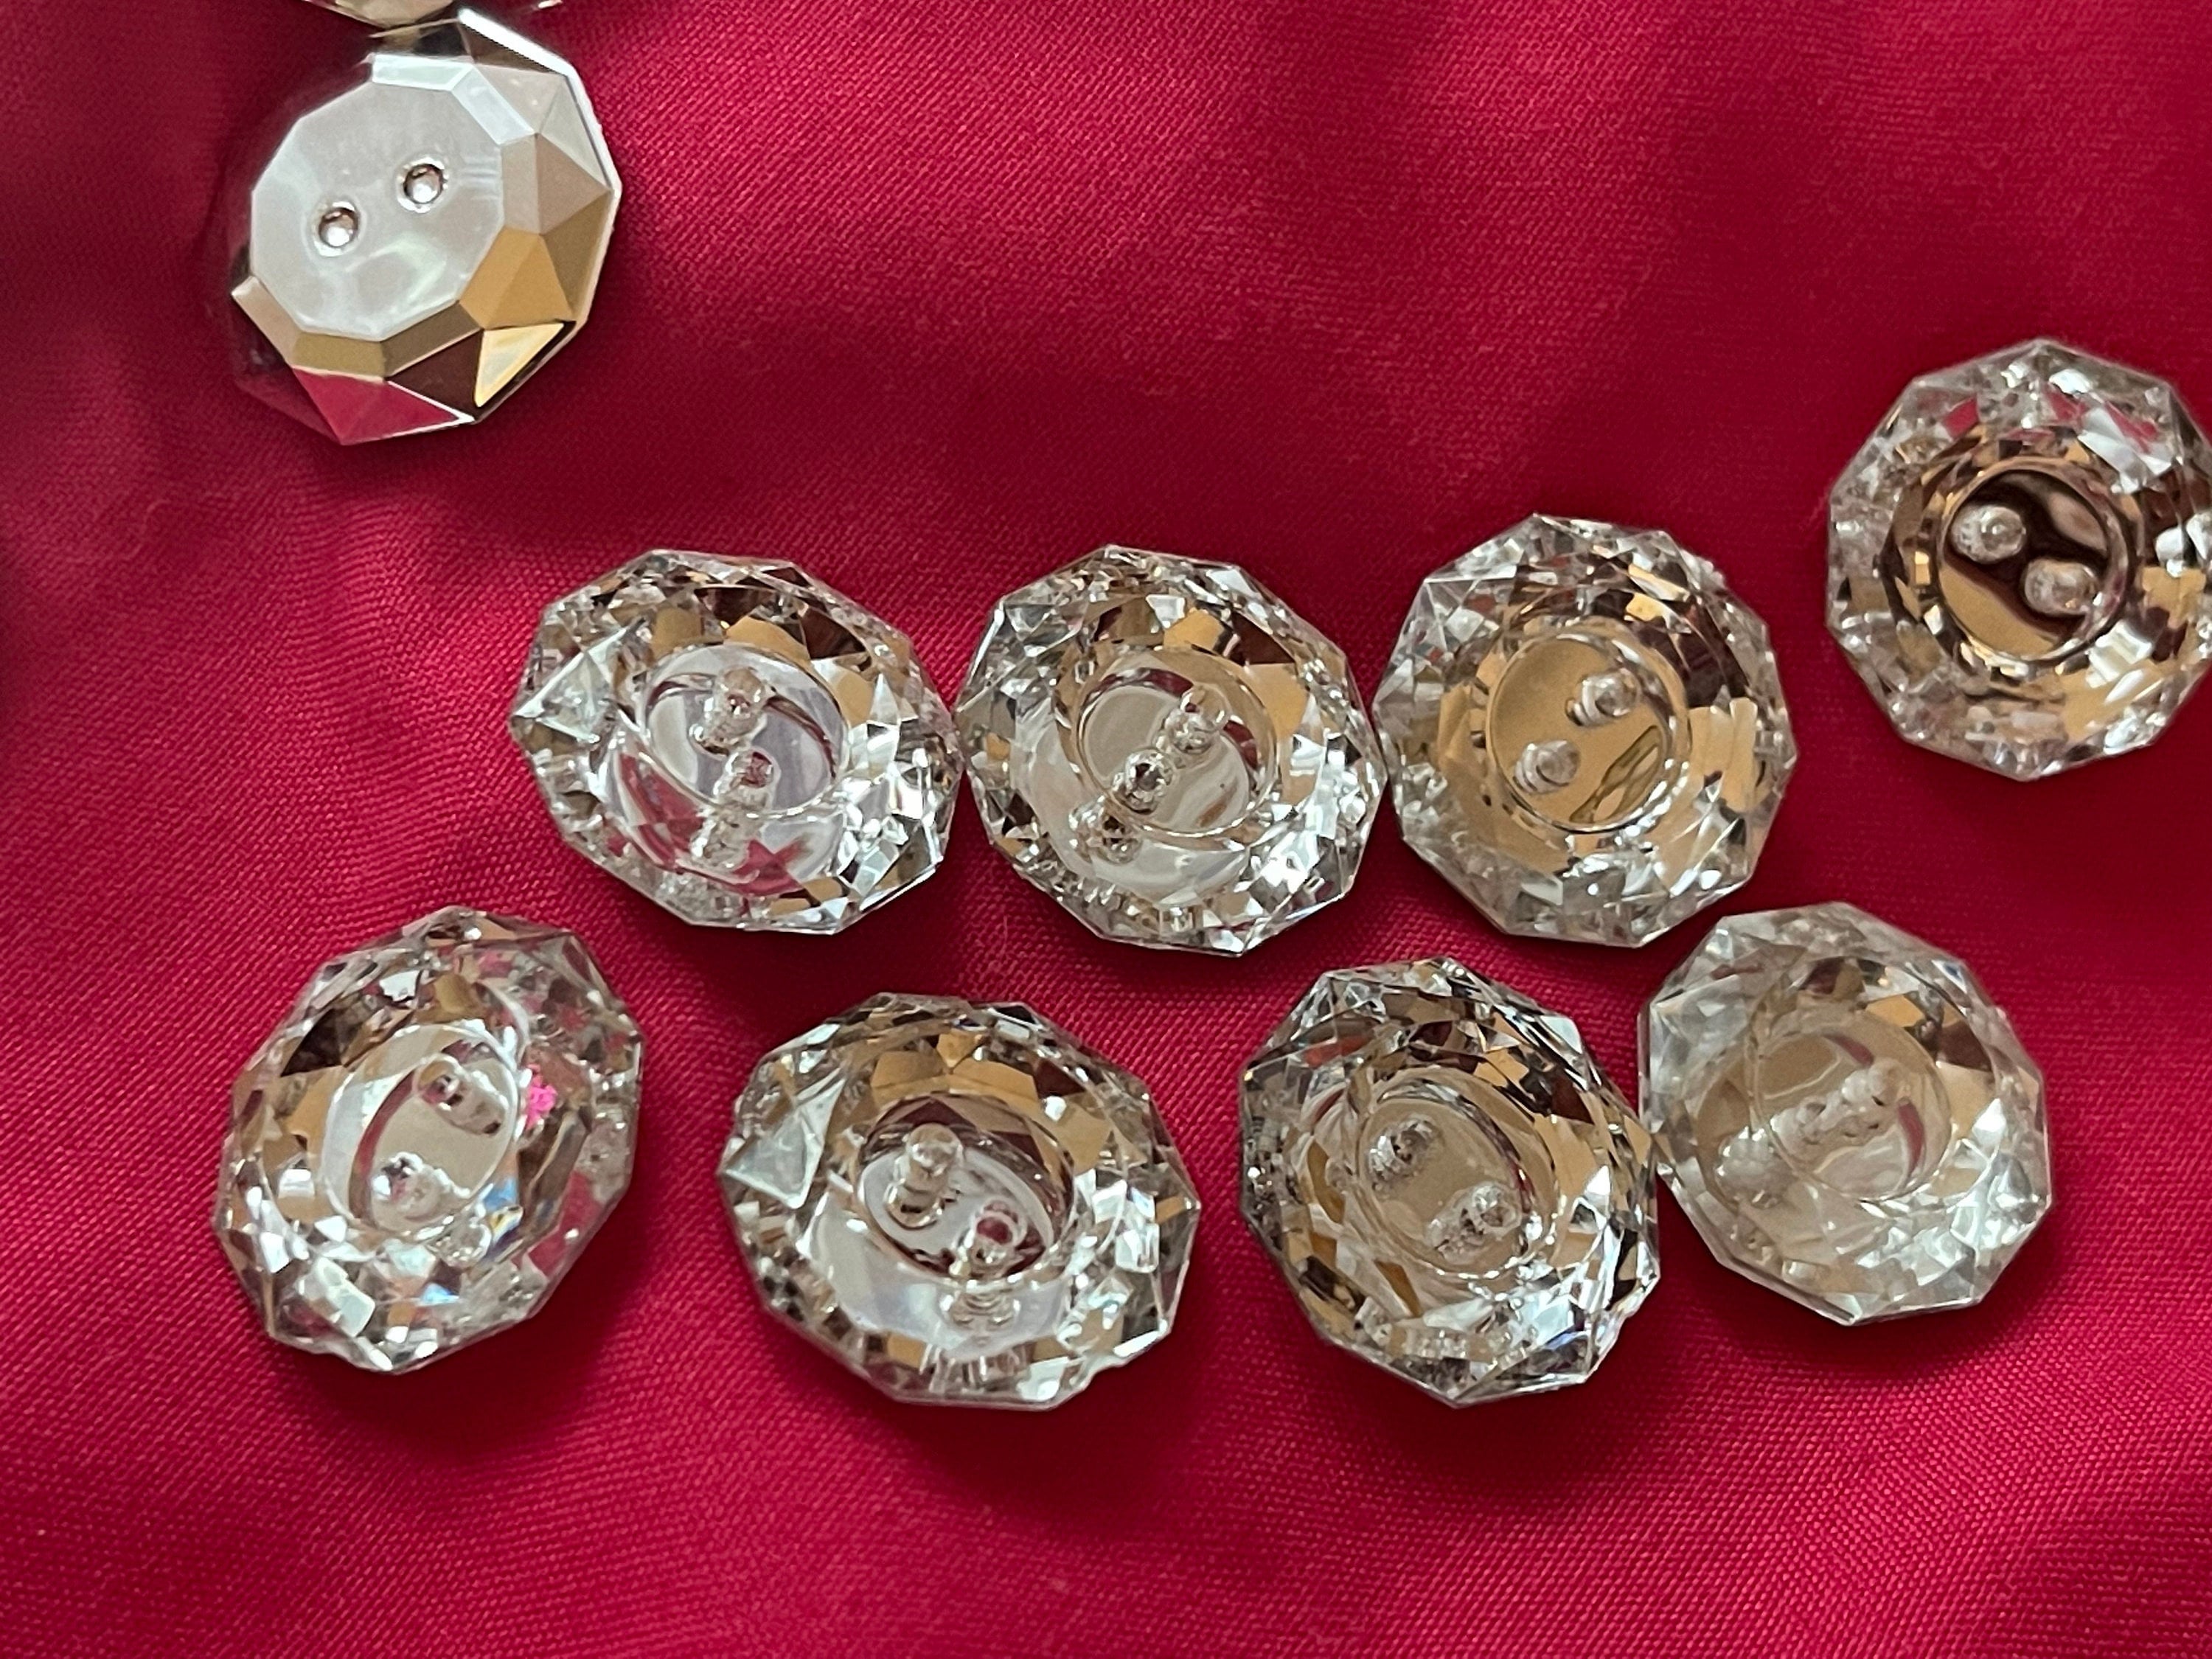 Rhinestone buttons, s, m, lg